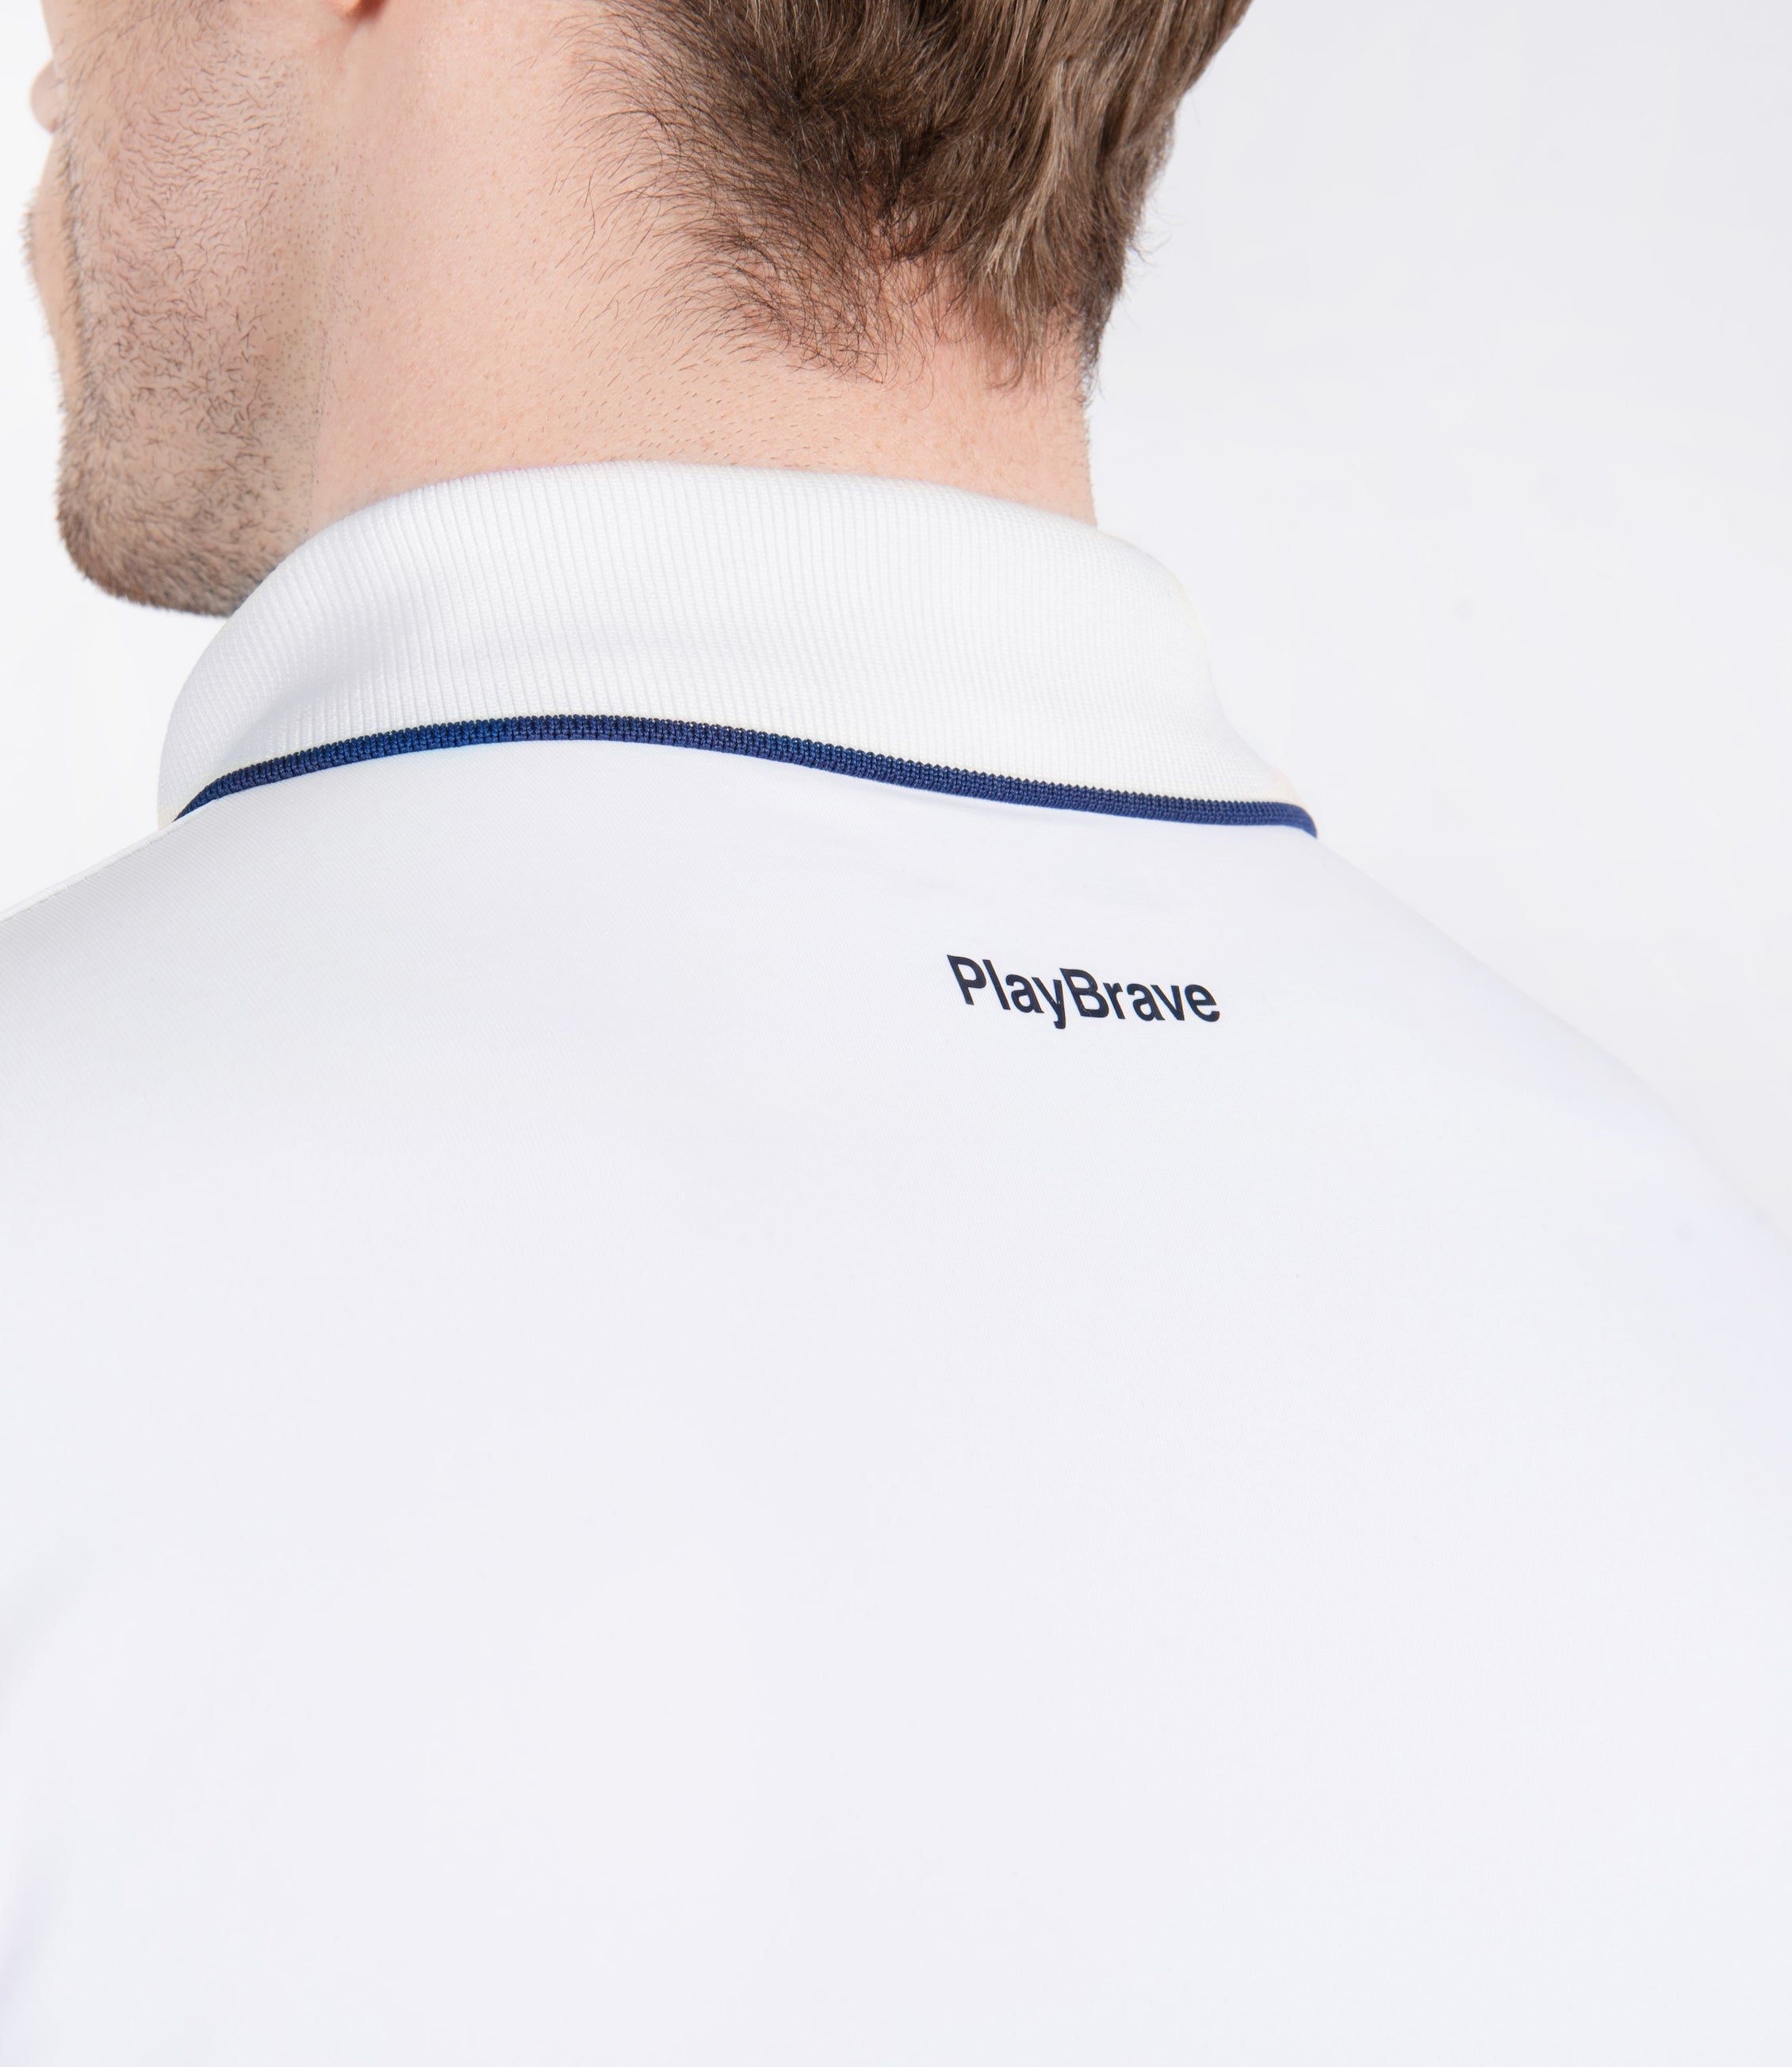 Mens Tenniswear-Men's Tops-PlayBrave-William Polo - White/Navy-PlayBrave Sports